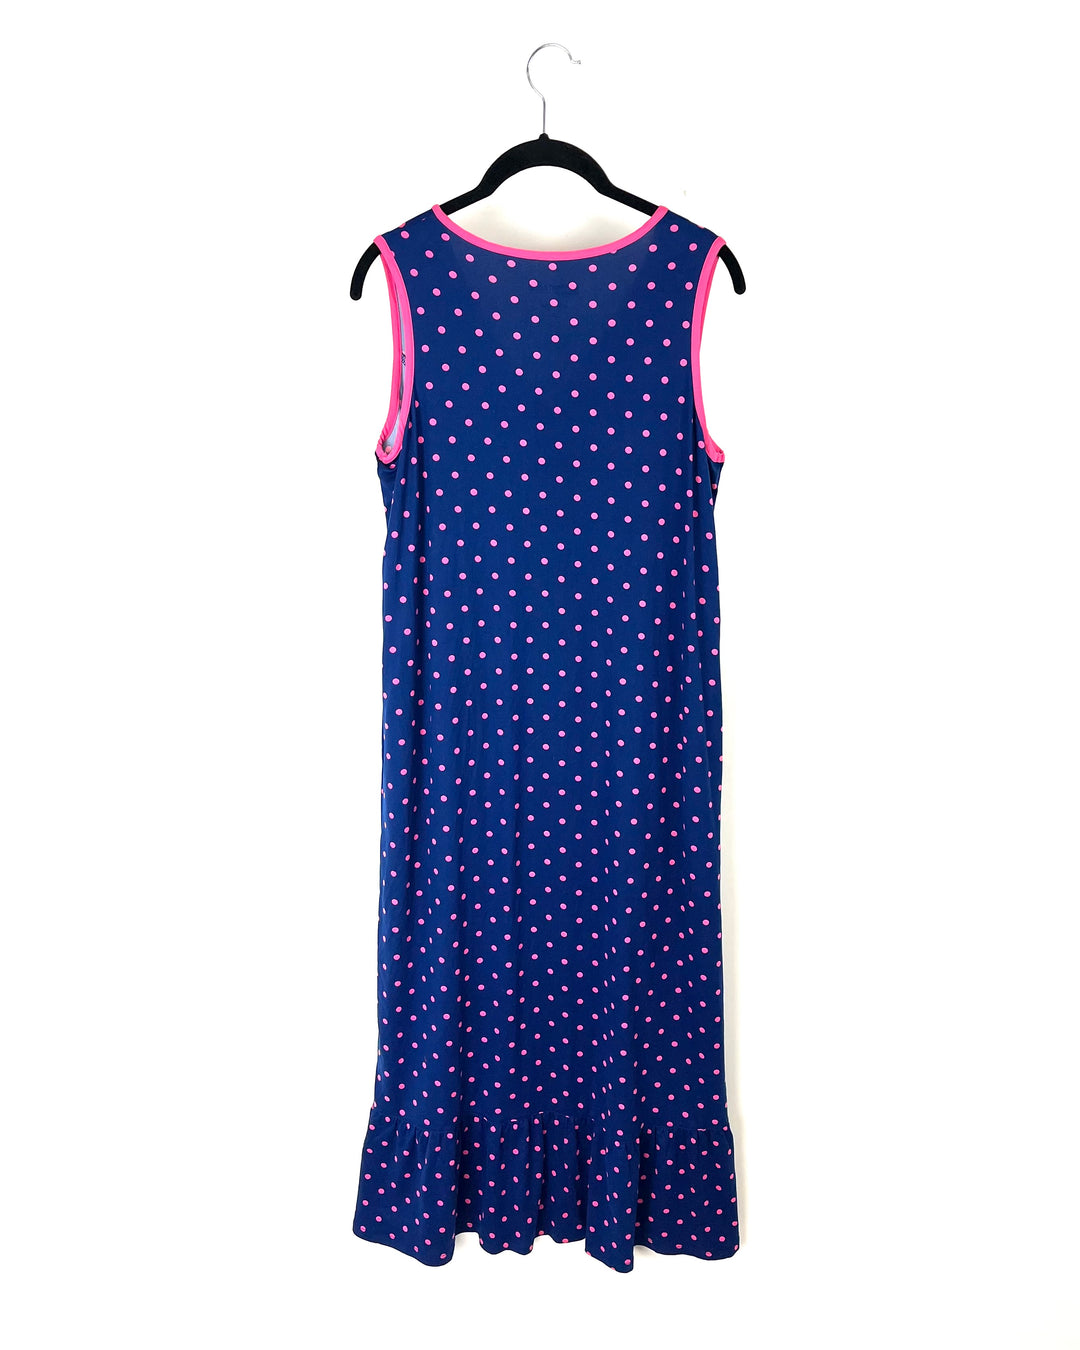 Polka Dot Lounge Dress - Small/Medium